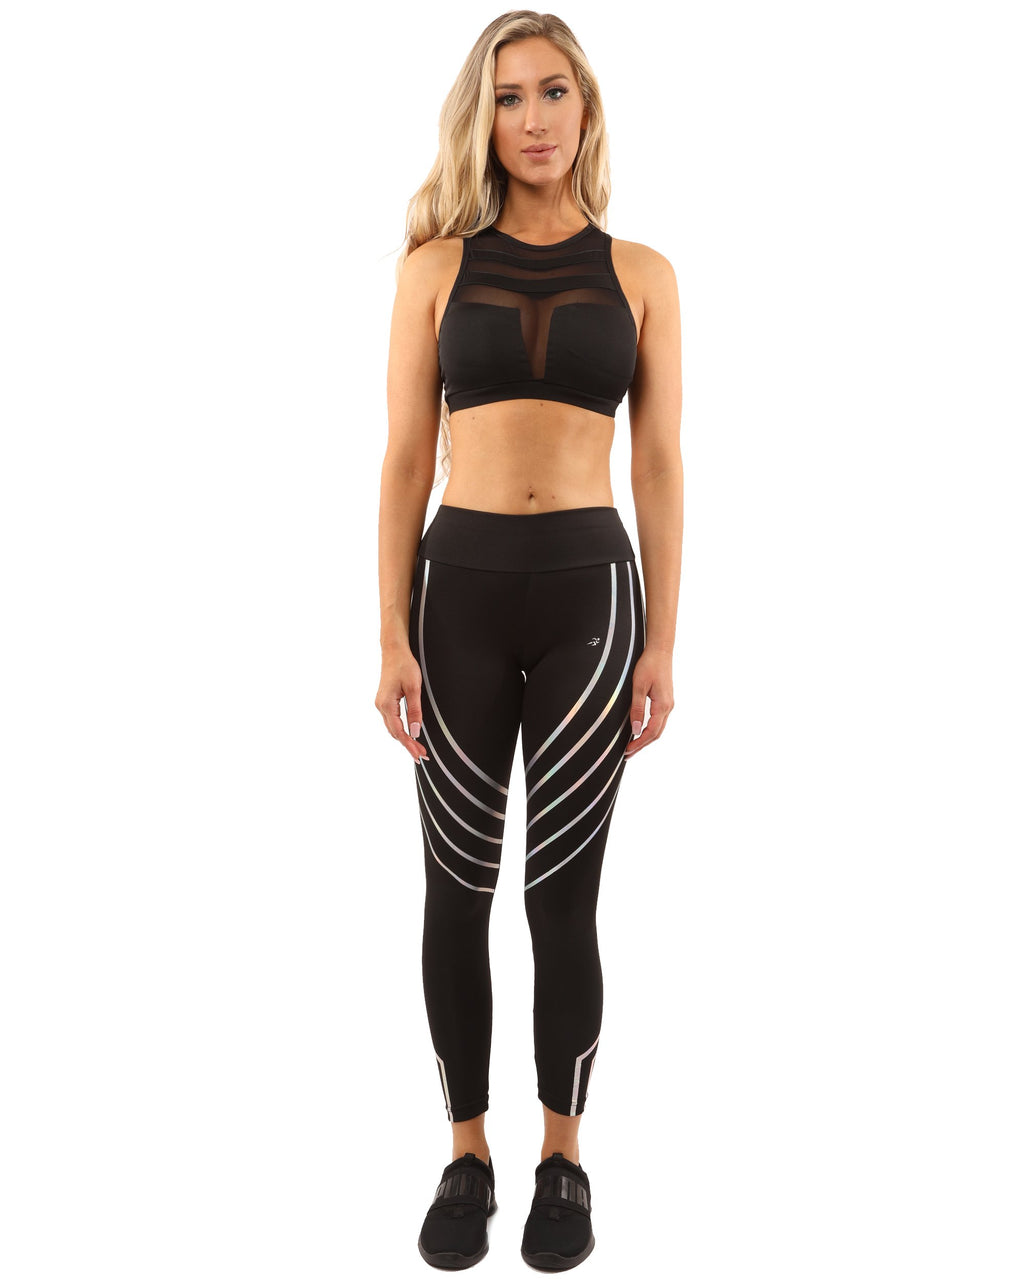 Athletic Wear (Sport Bras/Leggings) – Bloomkins Shops (part of Haynes Meade  Enterprises, LLC)